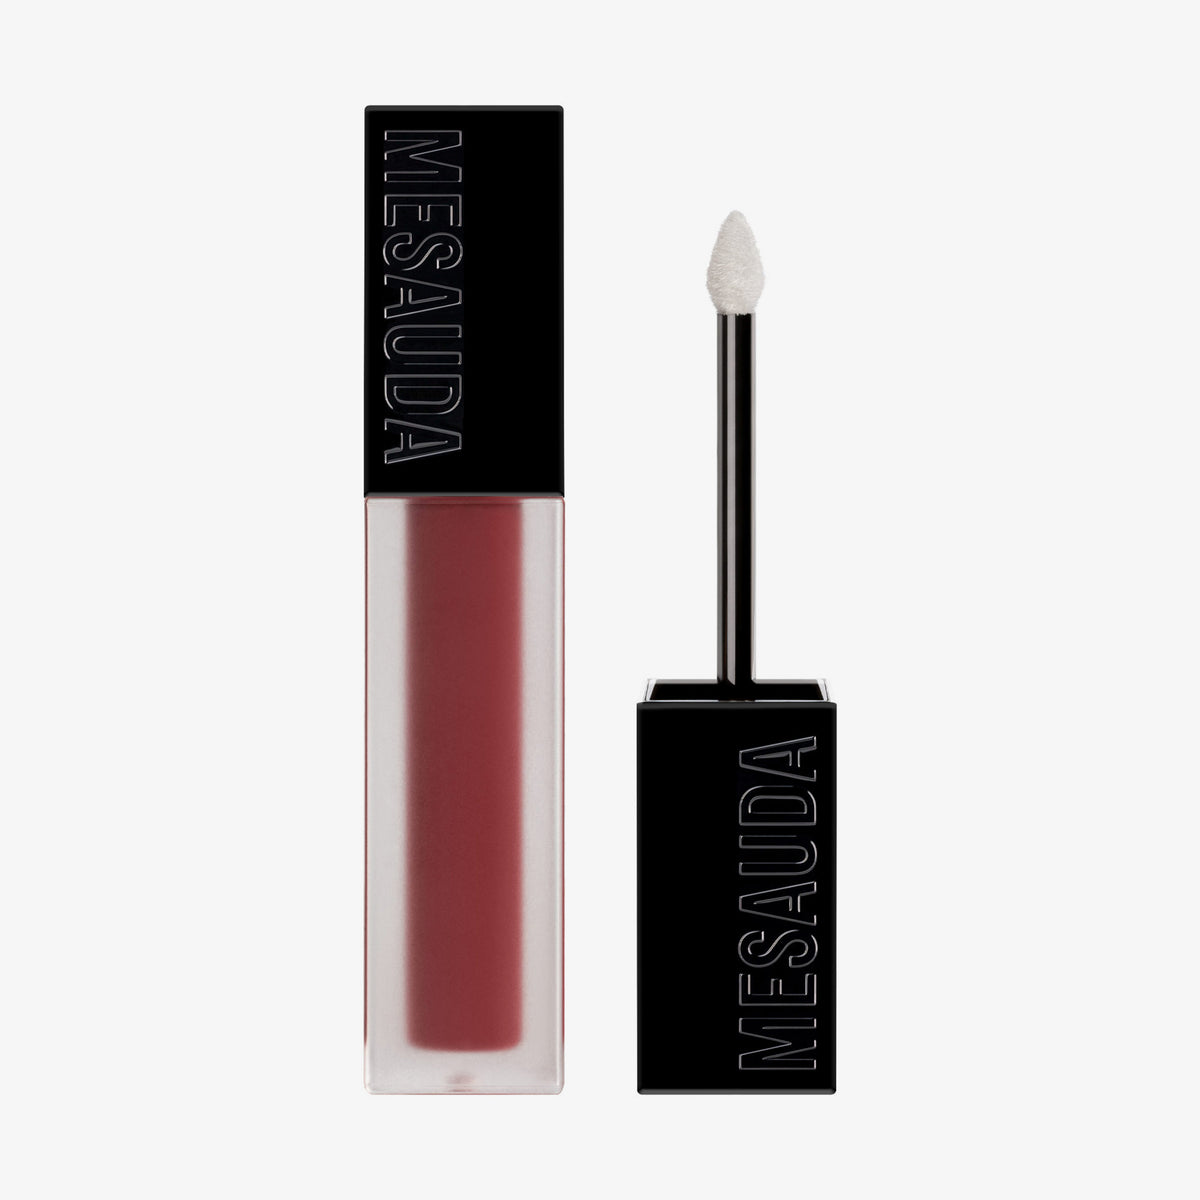 Mesauda Milano | Sublimatte Matte Liquid Lipstick 206 Absolute